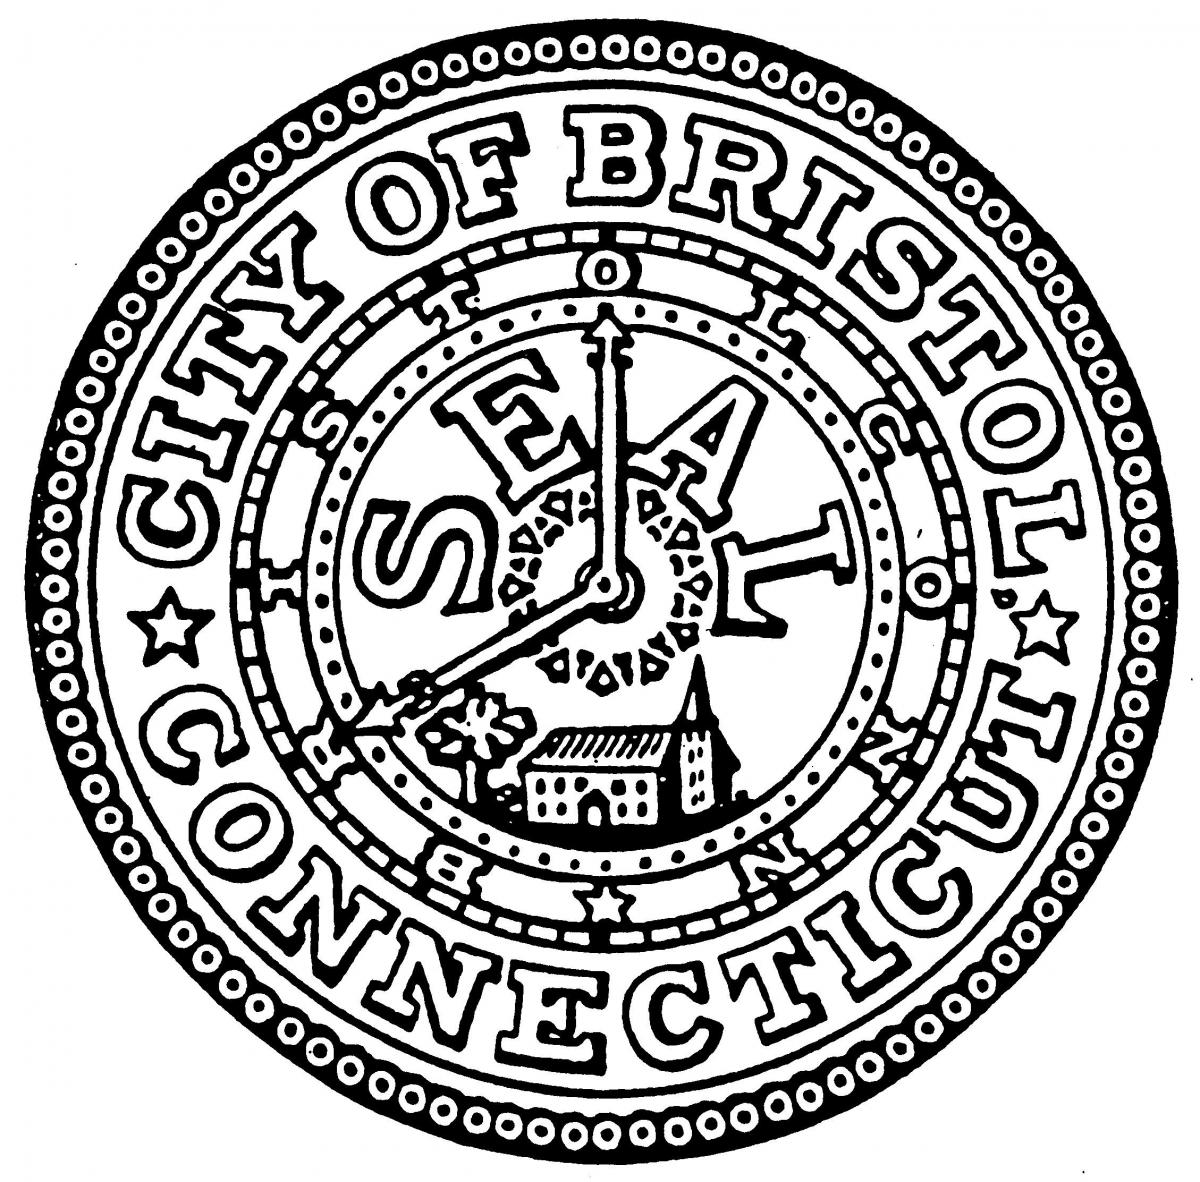 City of Bristol Logo